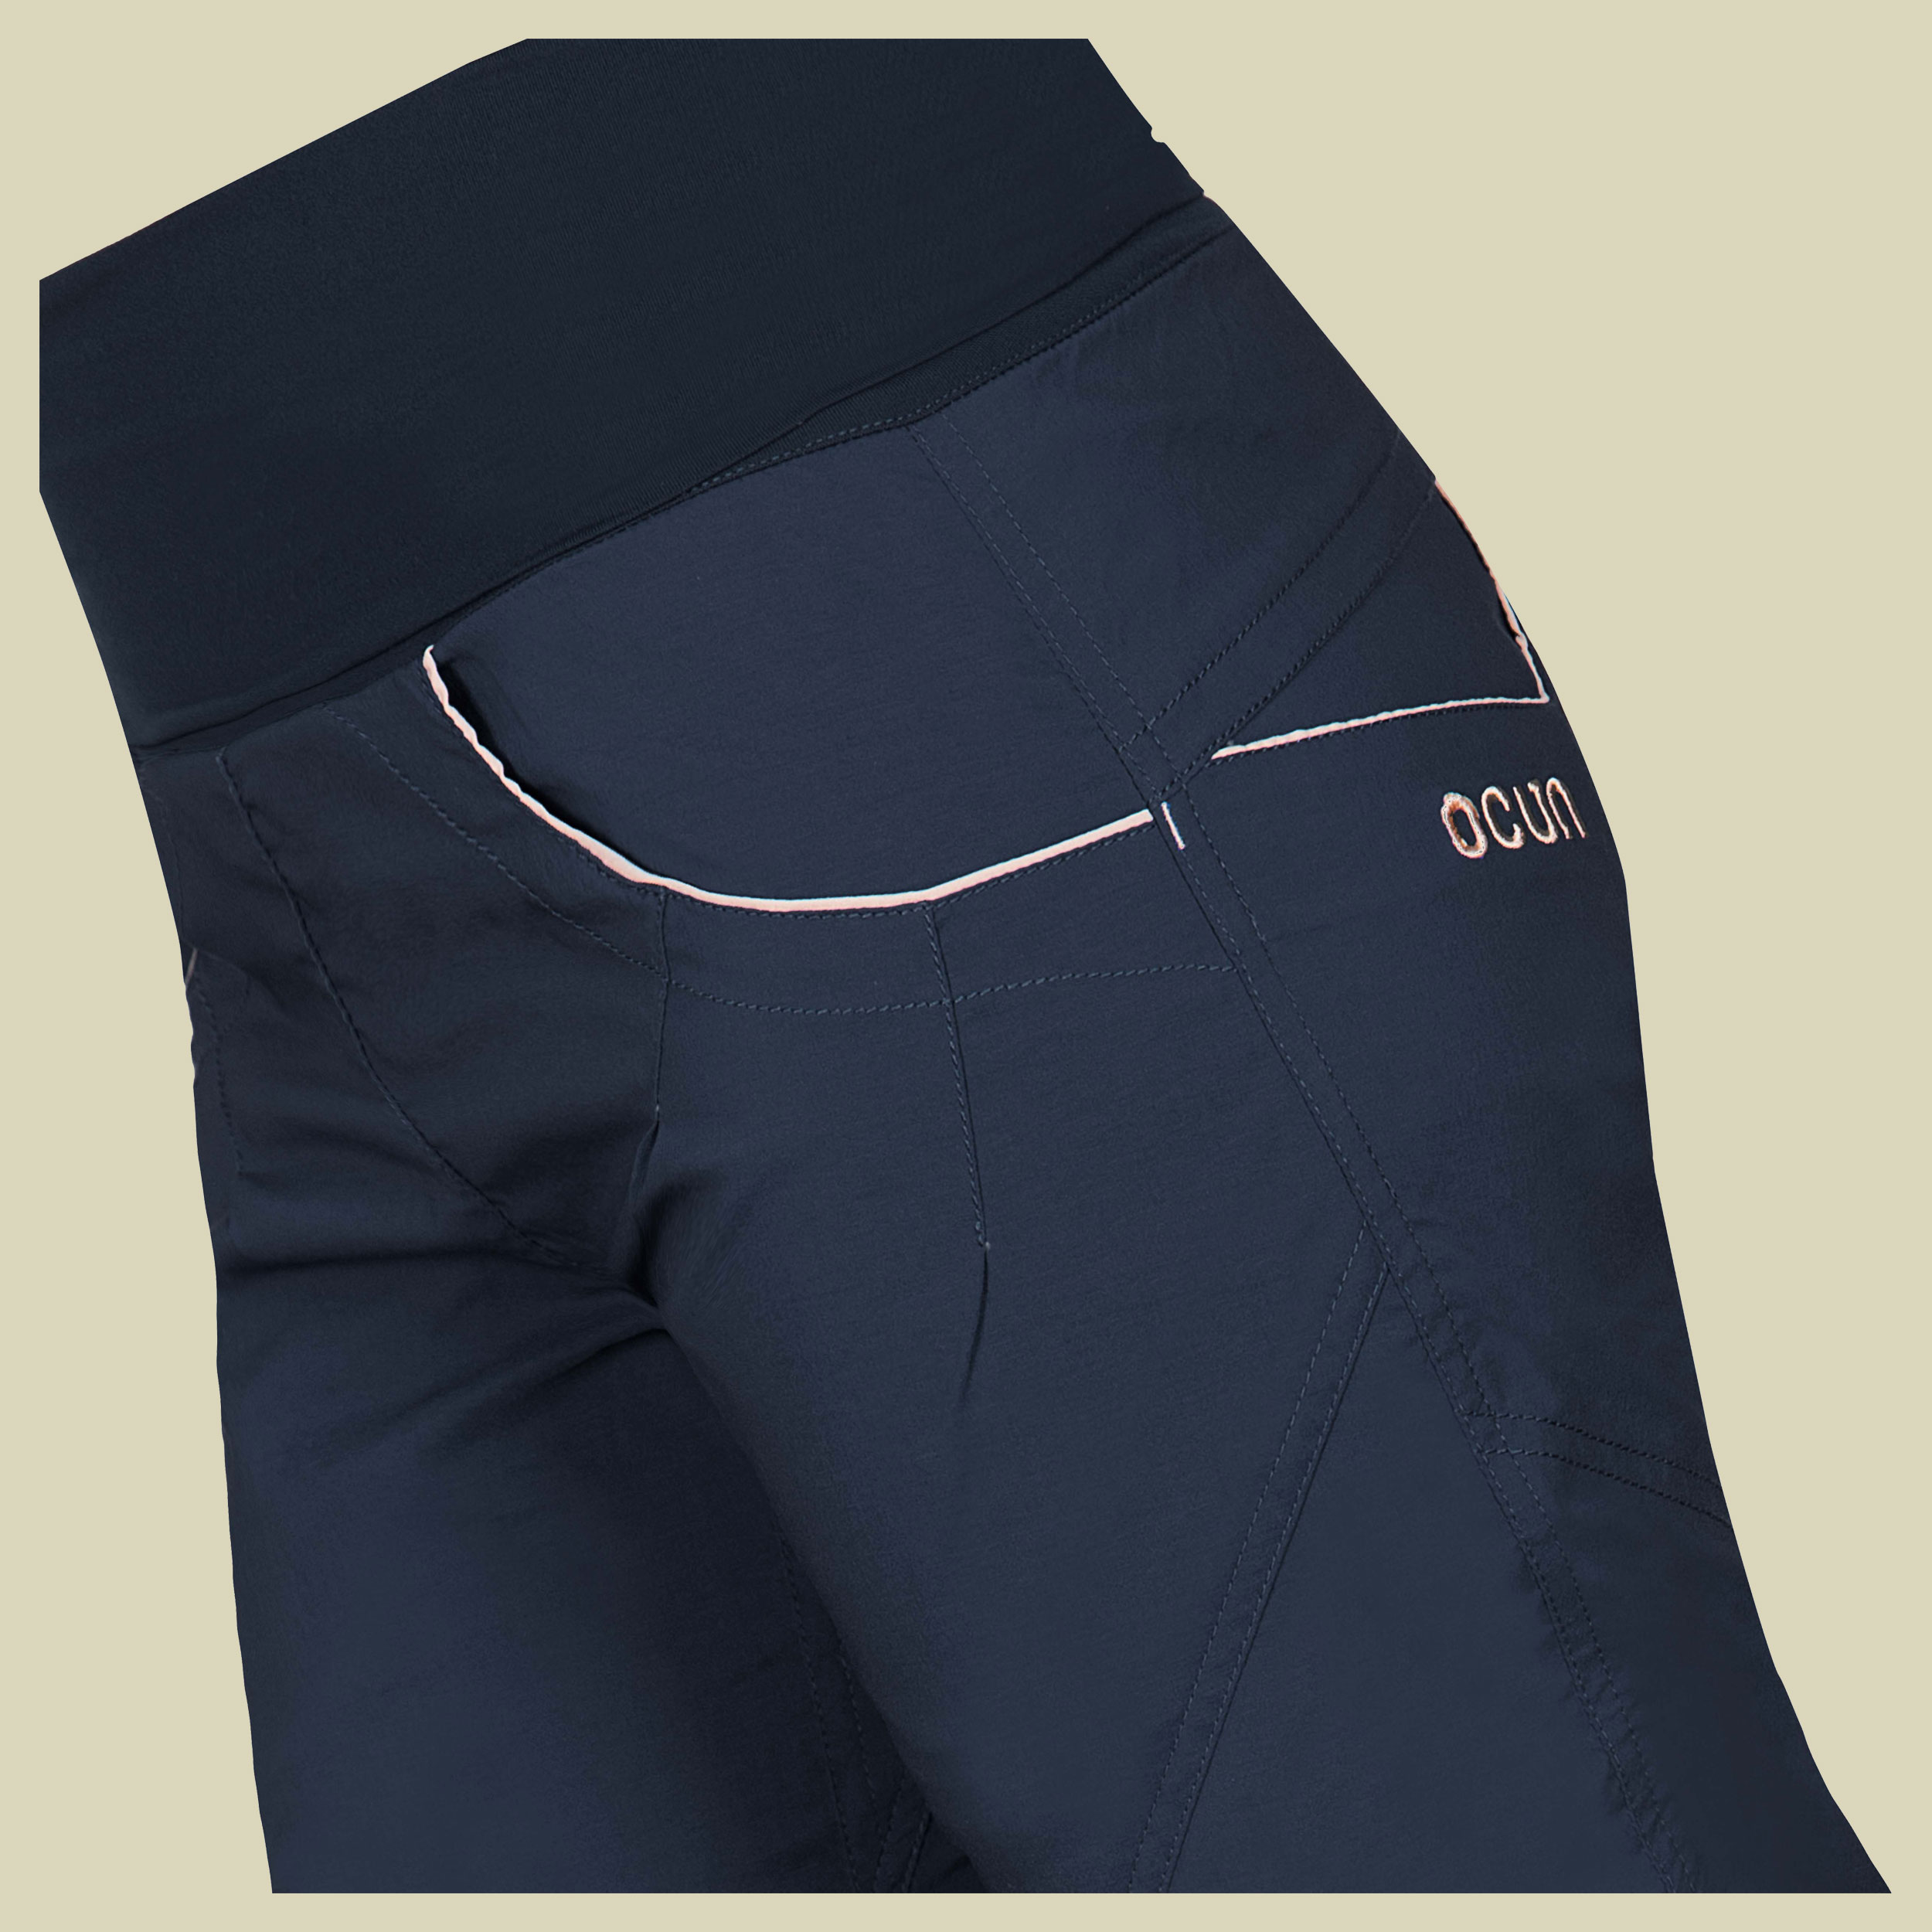 Noya Eco Pants Women Größe L  Farbe anthracite dark navy